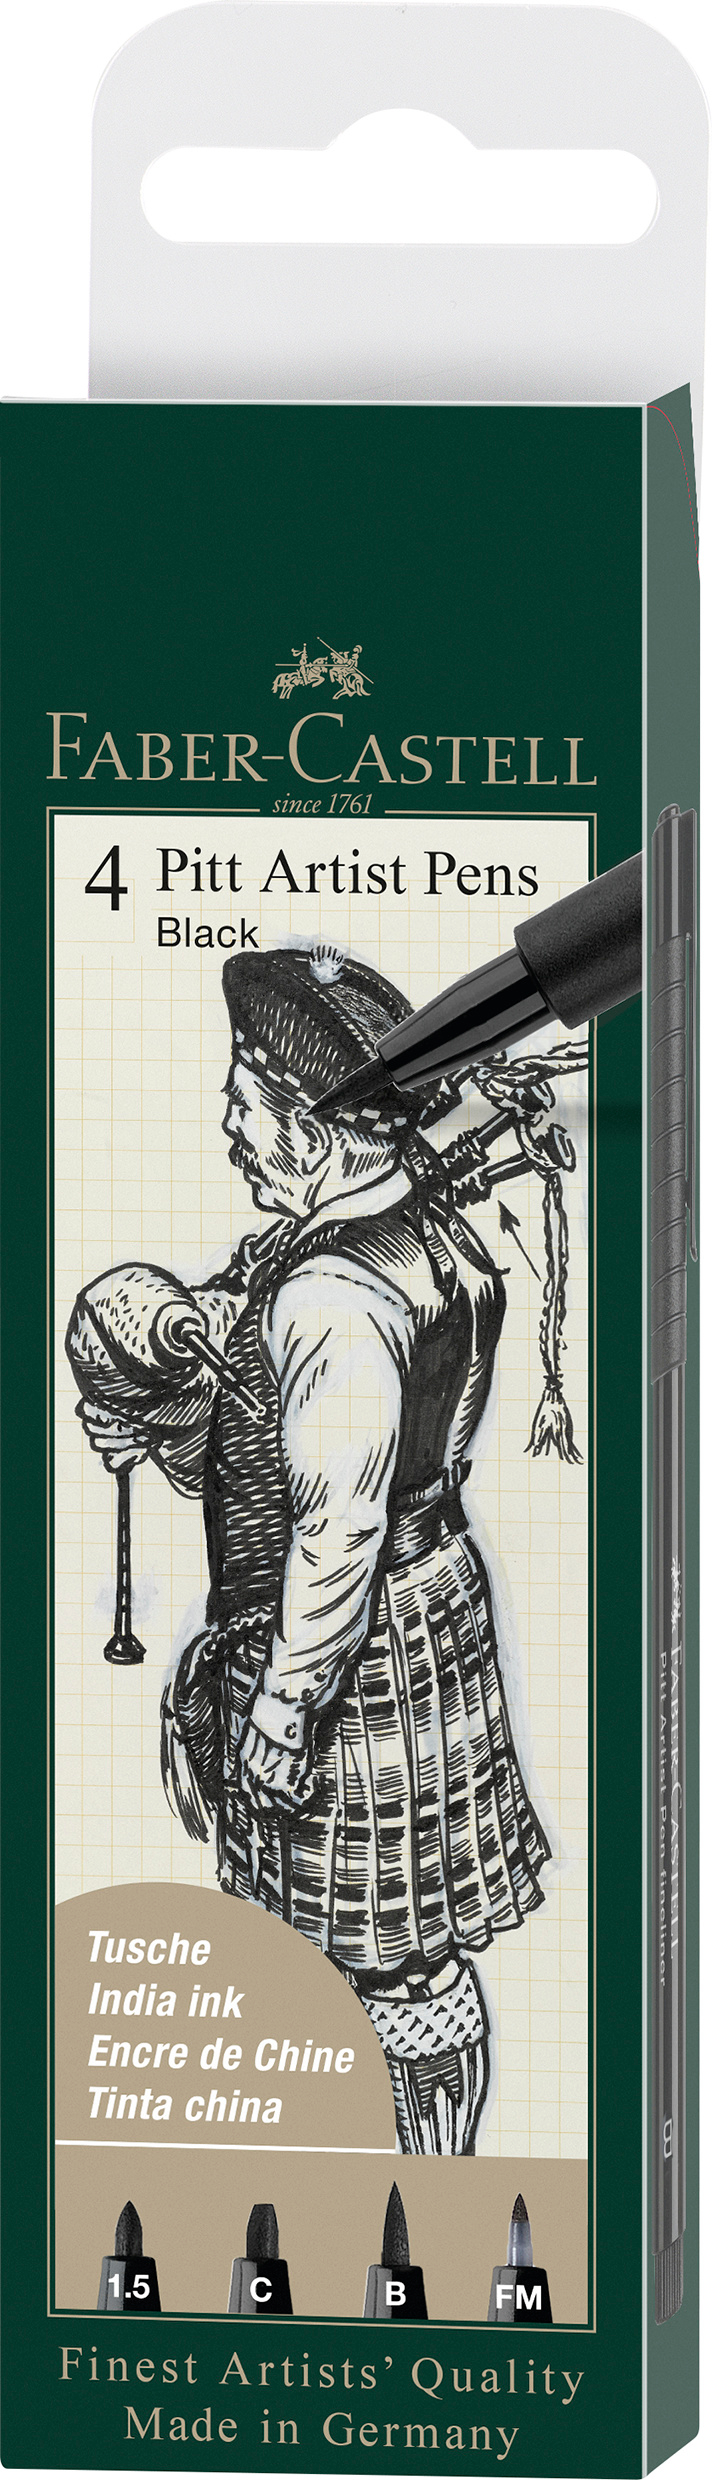 FABER-CASTELL Artist Pen Ink Pen 167153 noir 4 pcs.